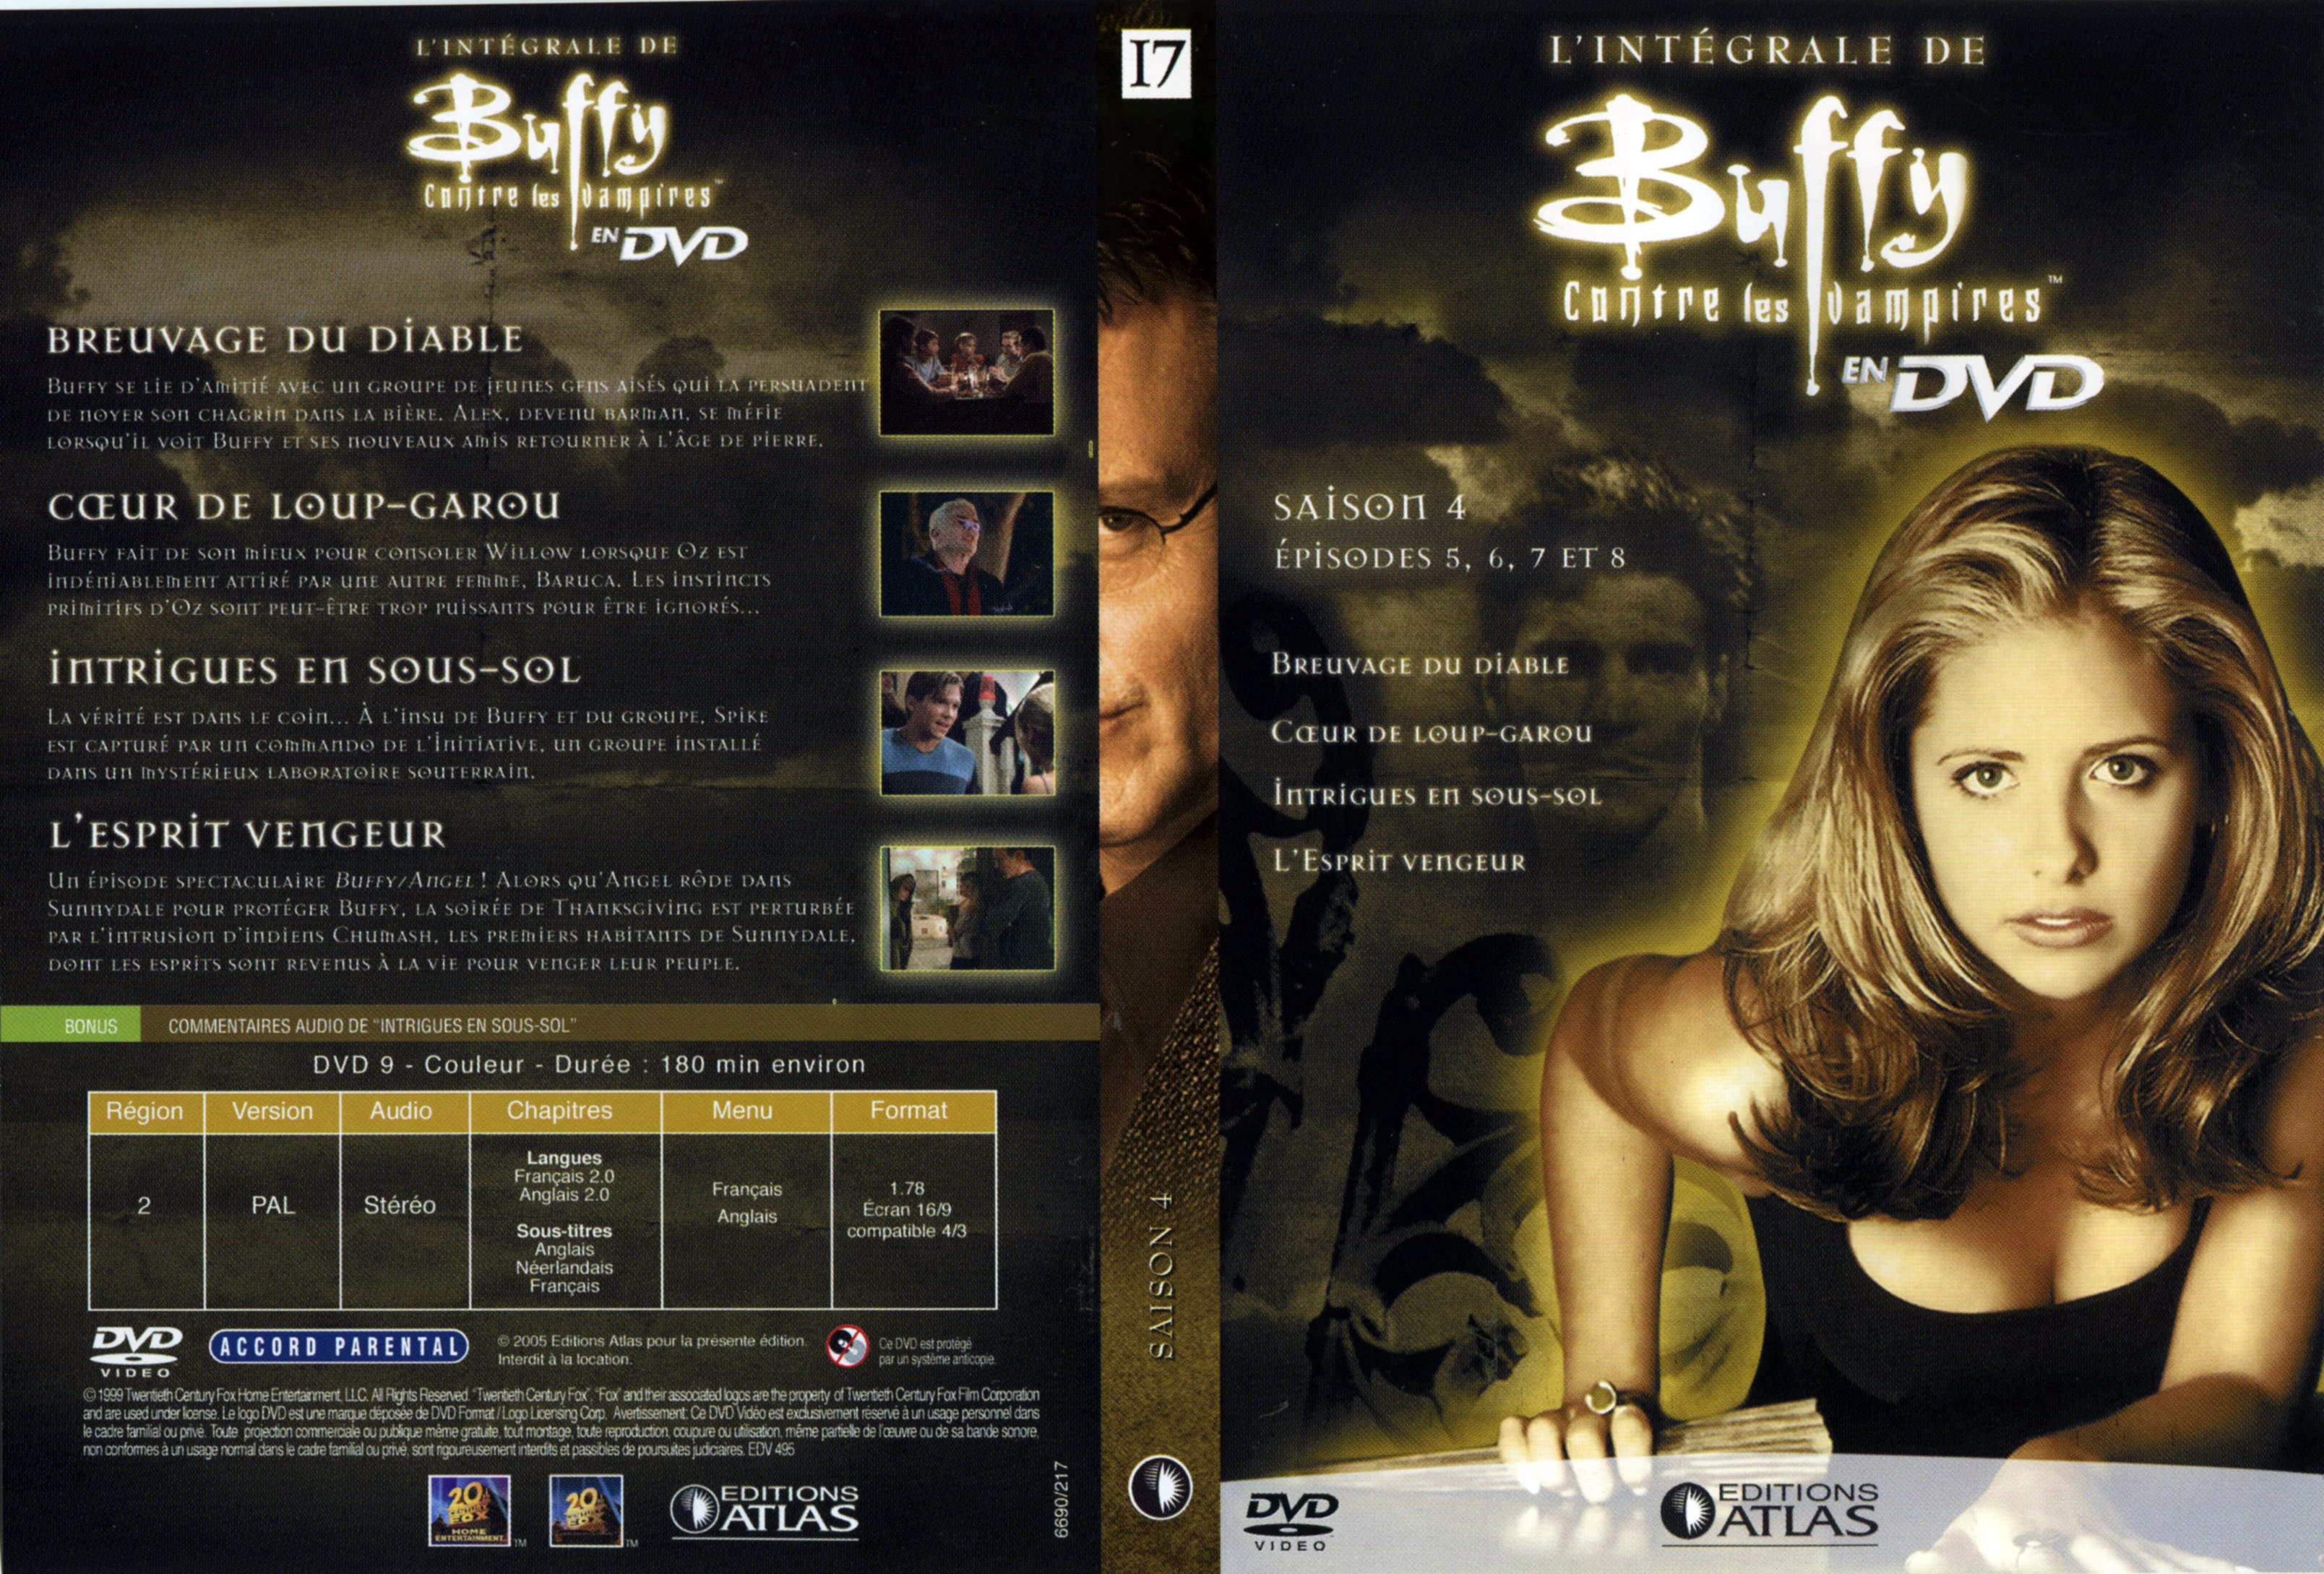 Jaquette DVD Buffy contre les vampires DVD 17 Ed Atlas